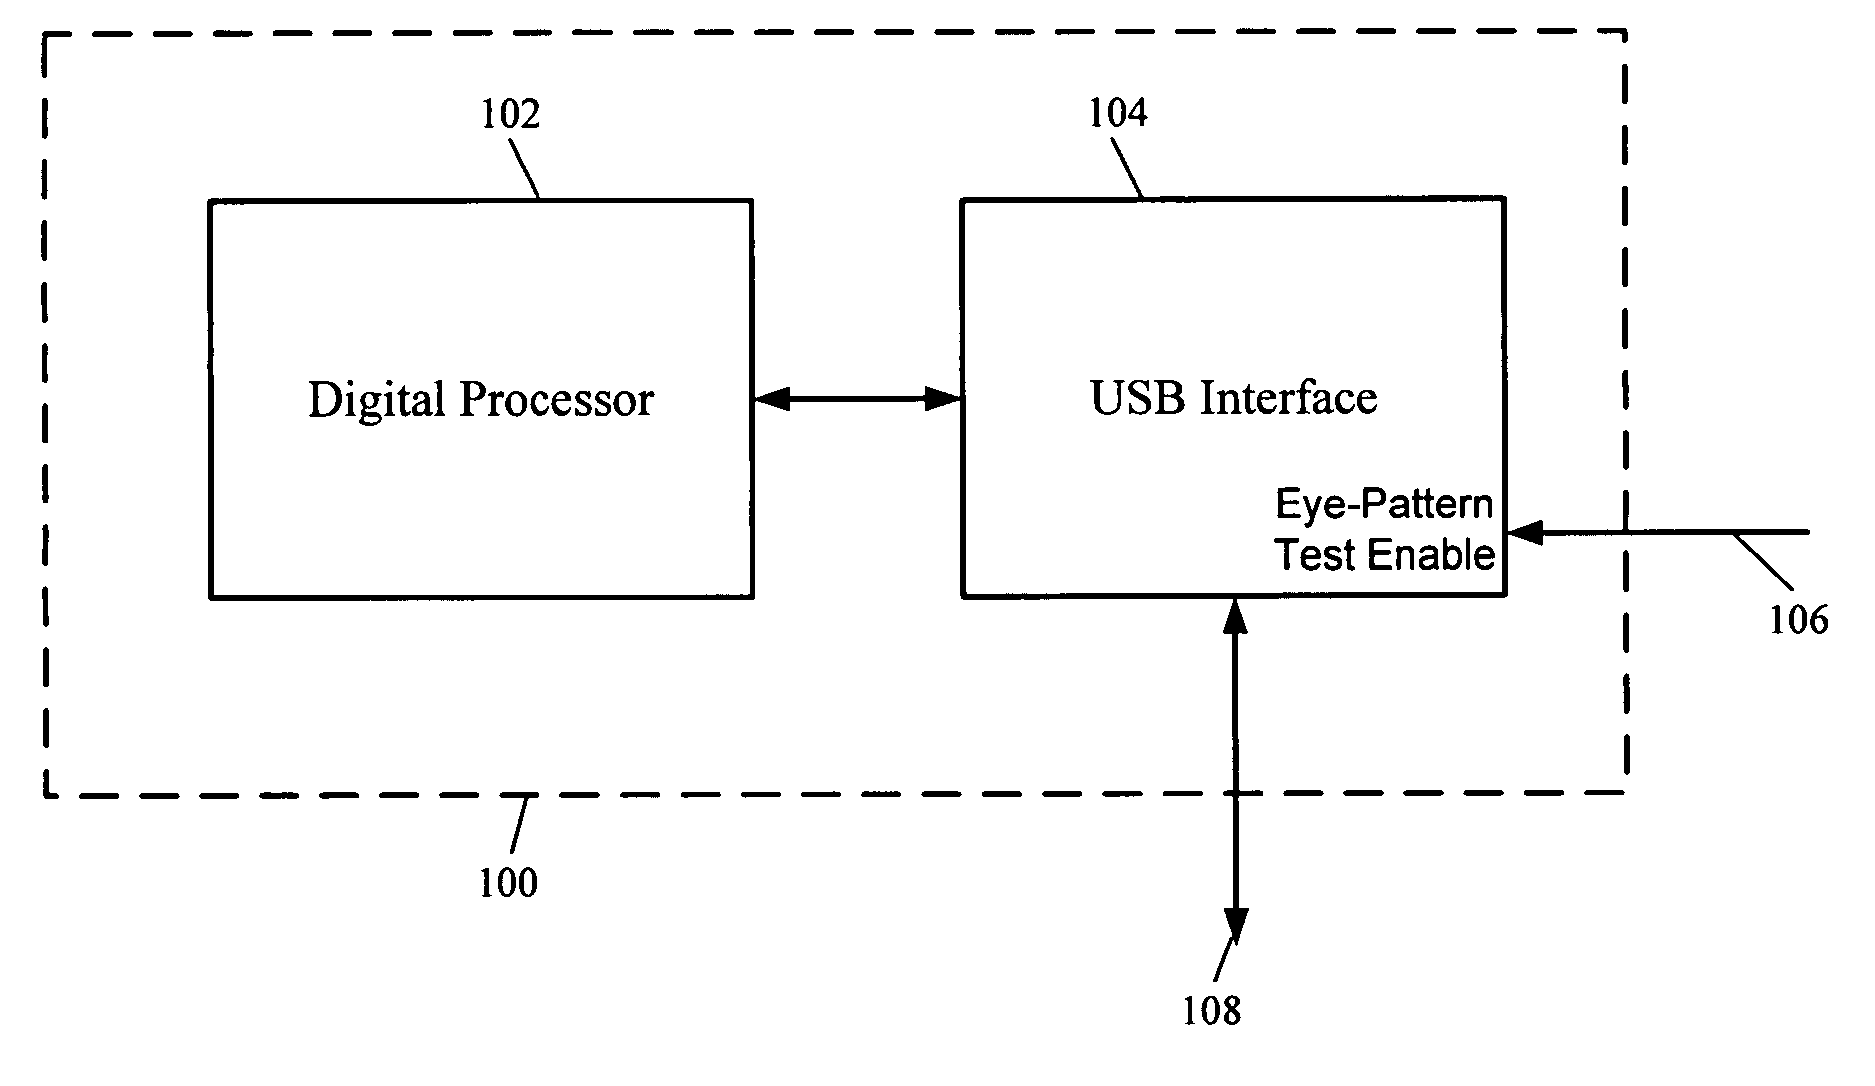 USB eye pattern test mode